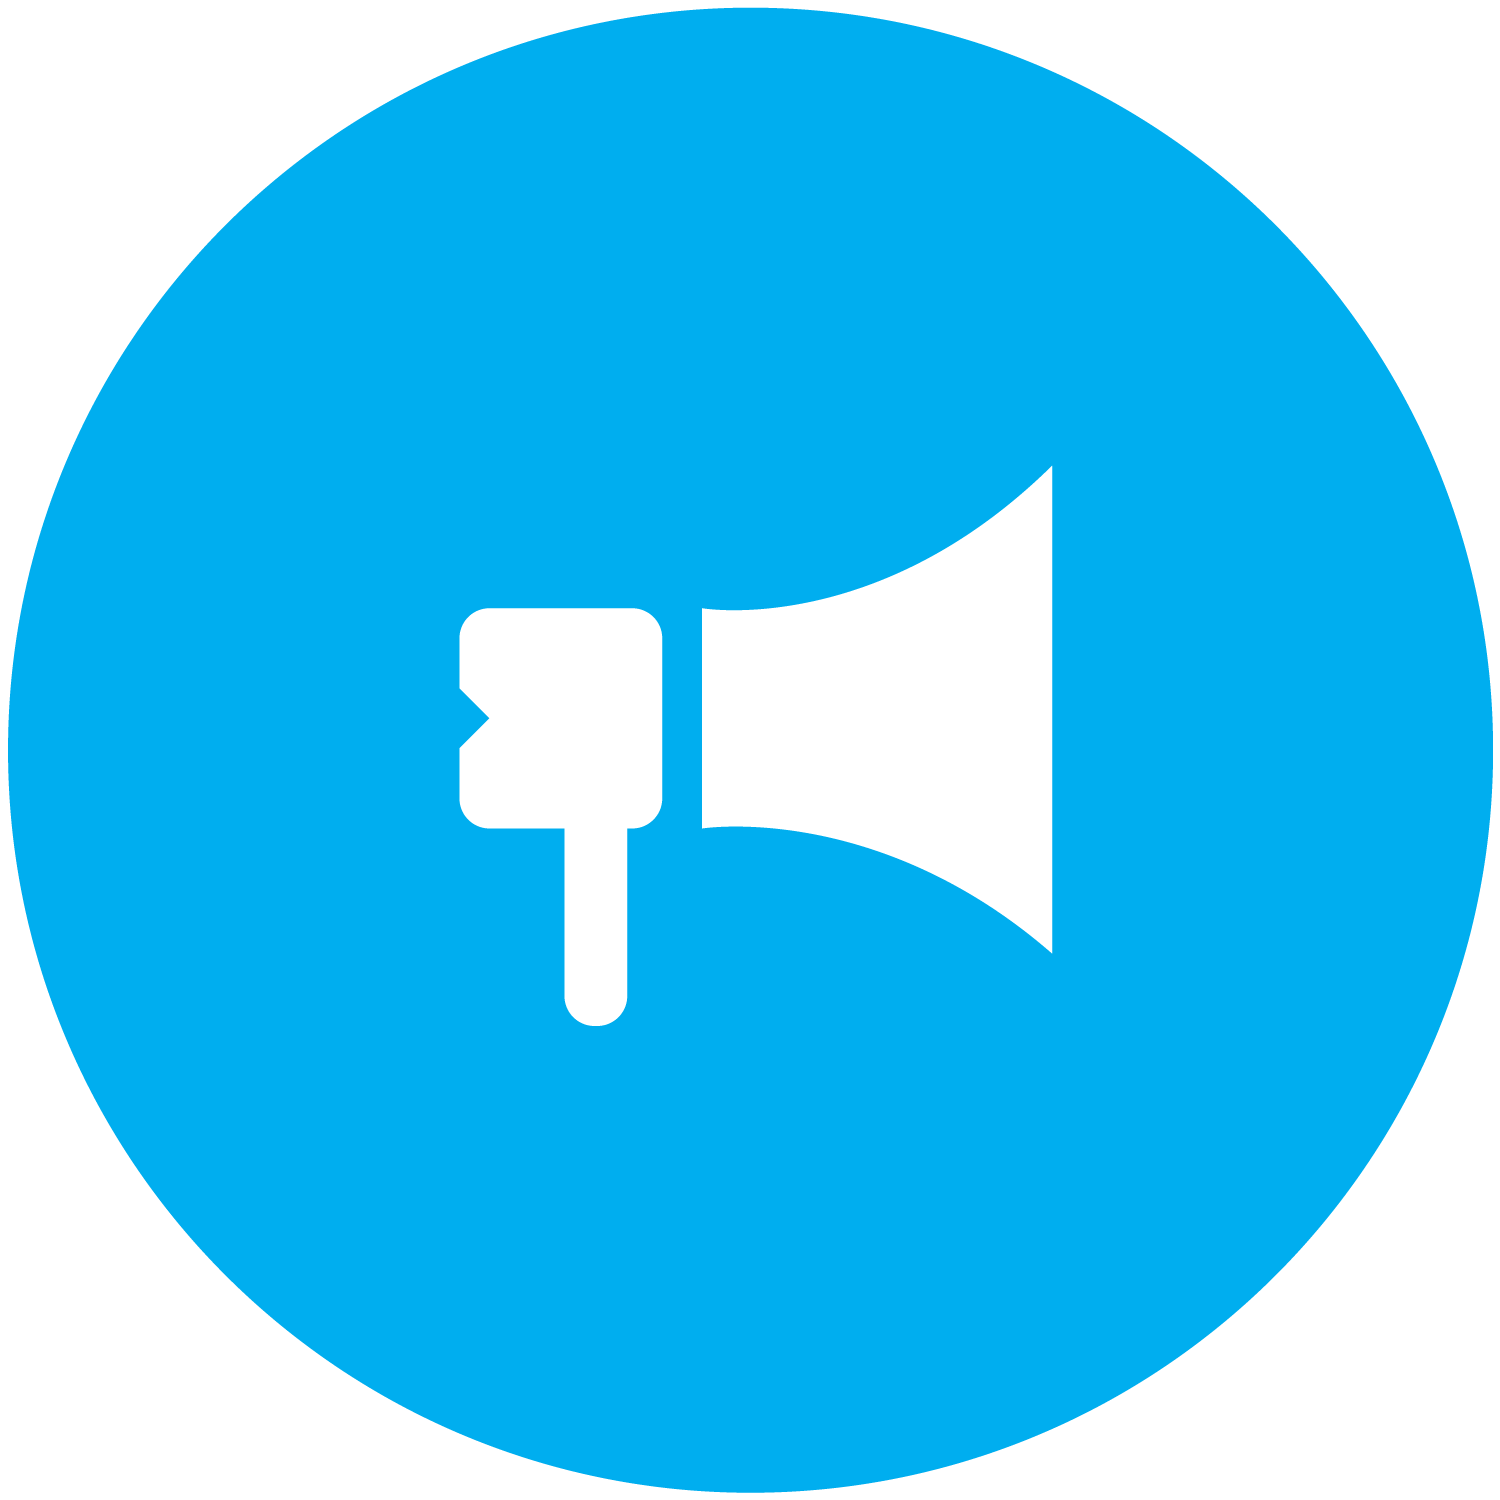 Telegram Icons Social Logo PNG Image High Quality PNG Image